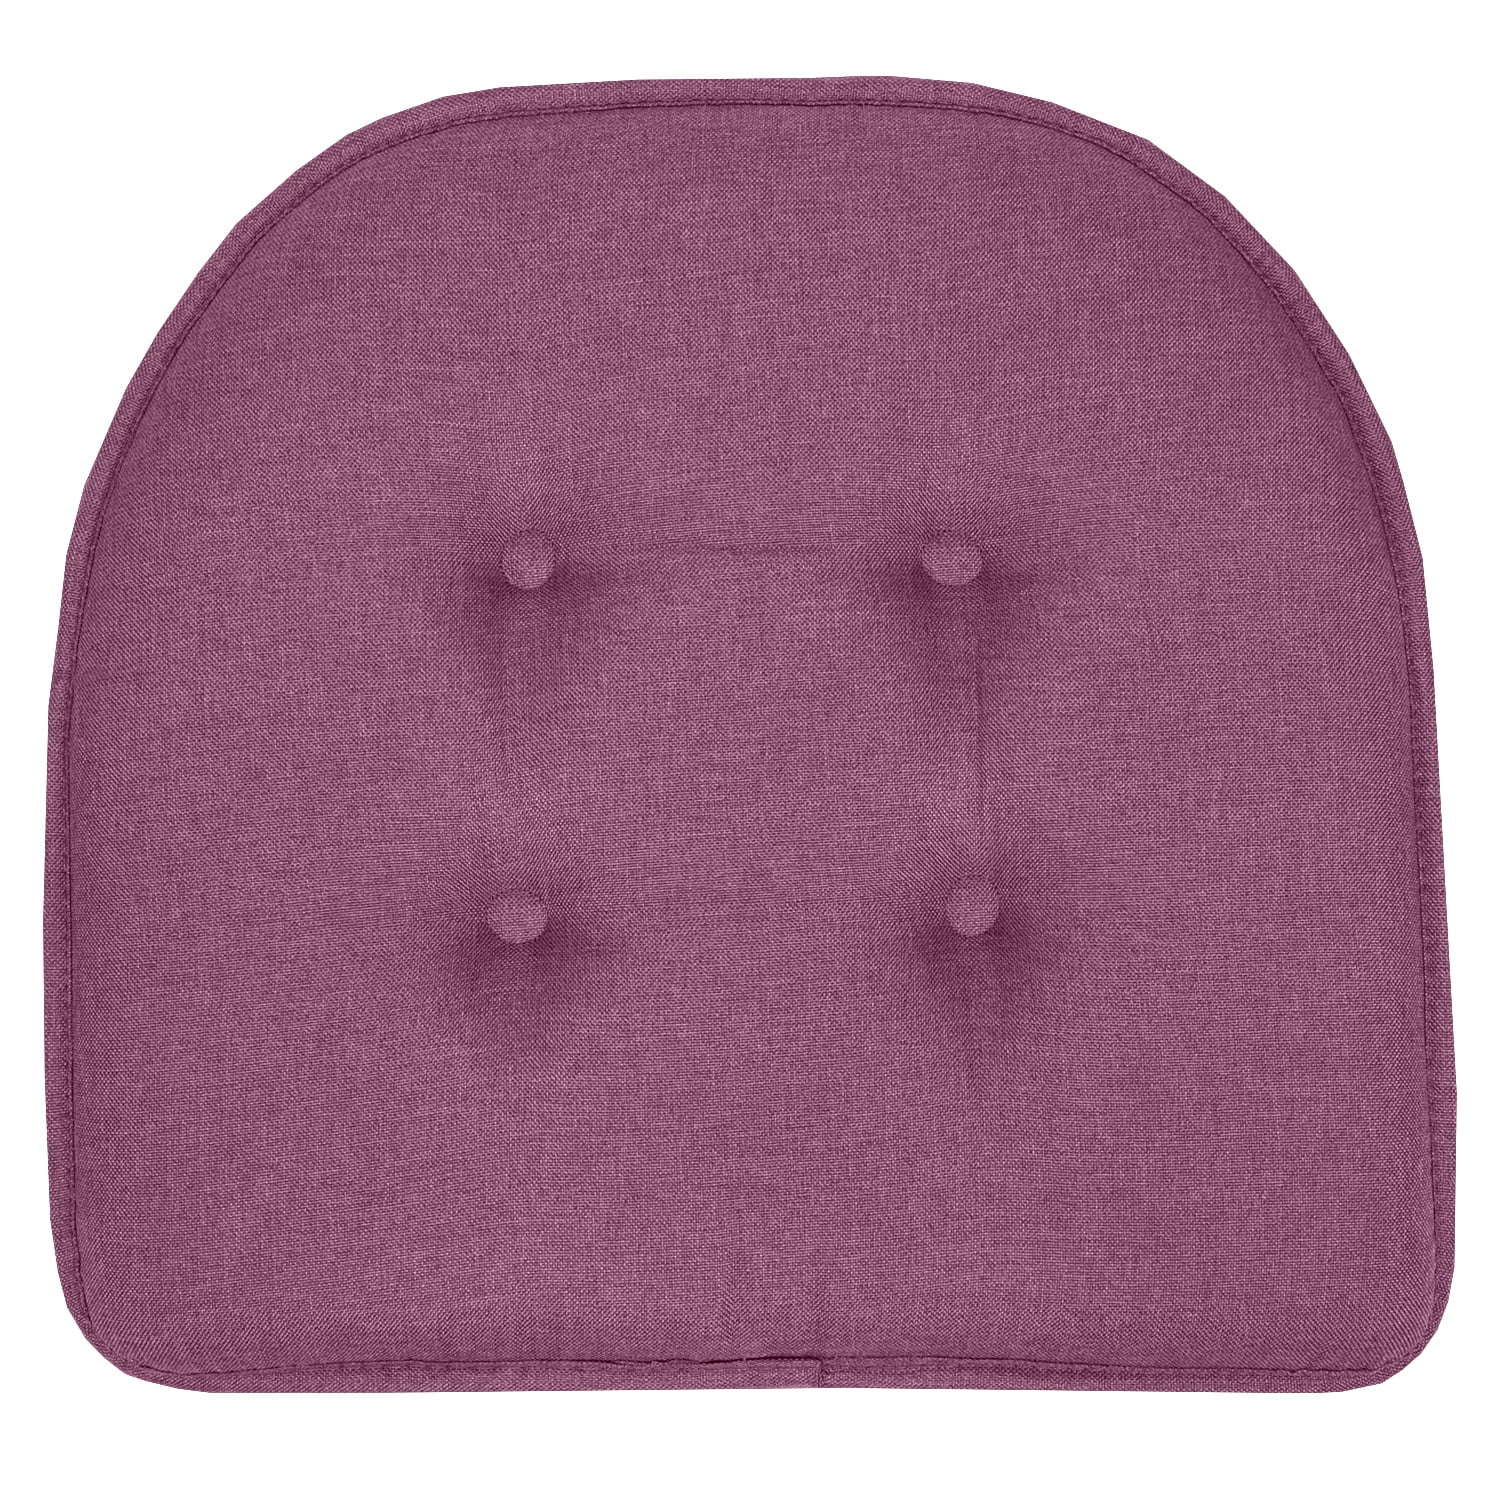 Sweet Home Collection  Solid U Shaped Memory Foam 17 x 16 Chair Cushions,  Purple, 4 PK, 4PK - Harris Teeter